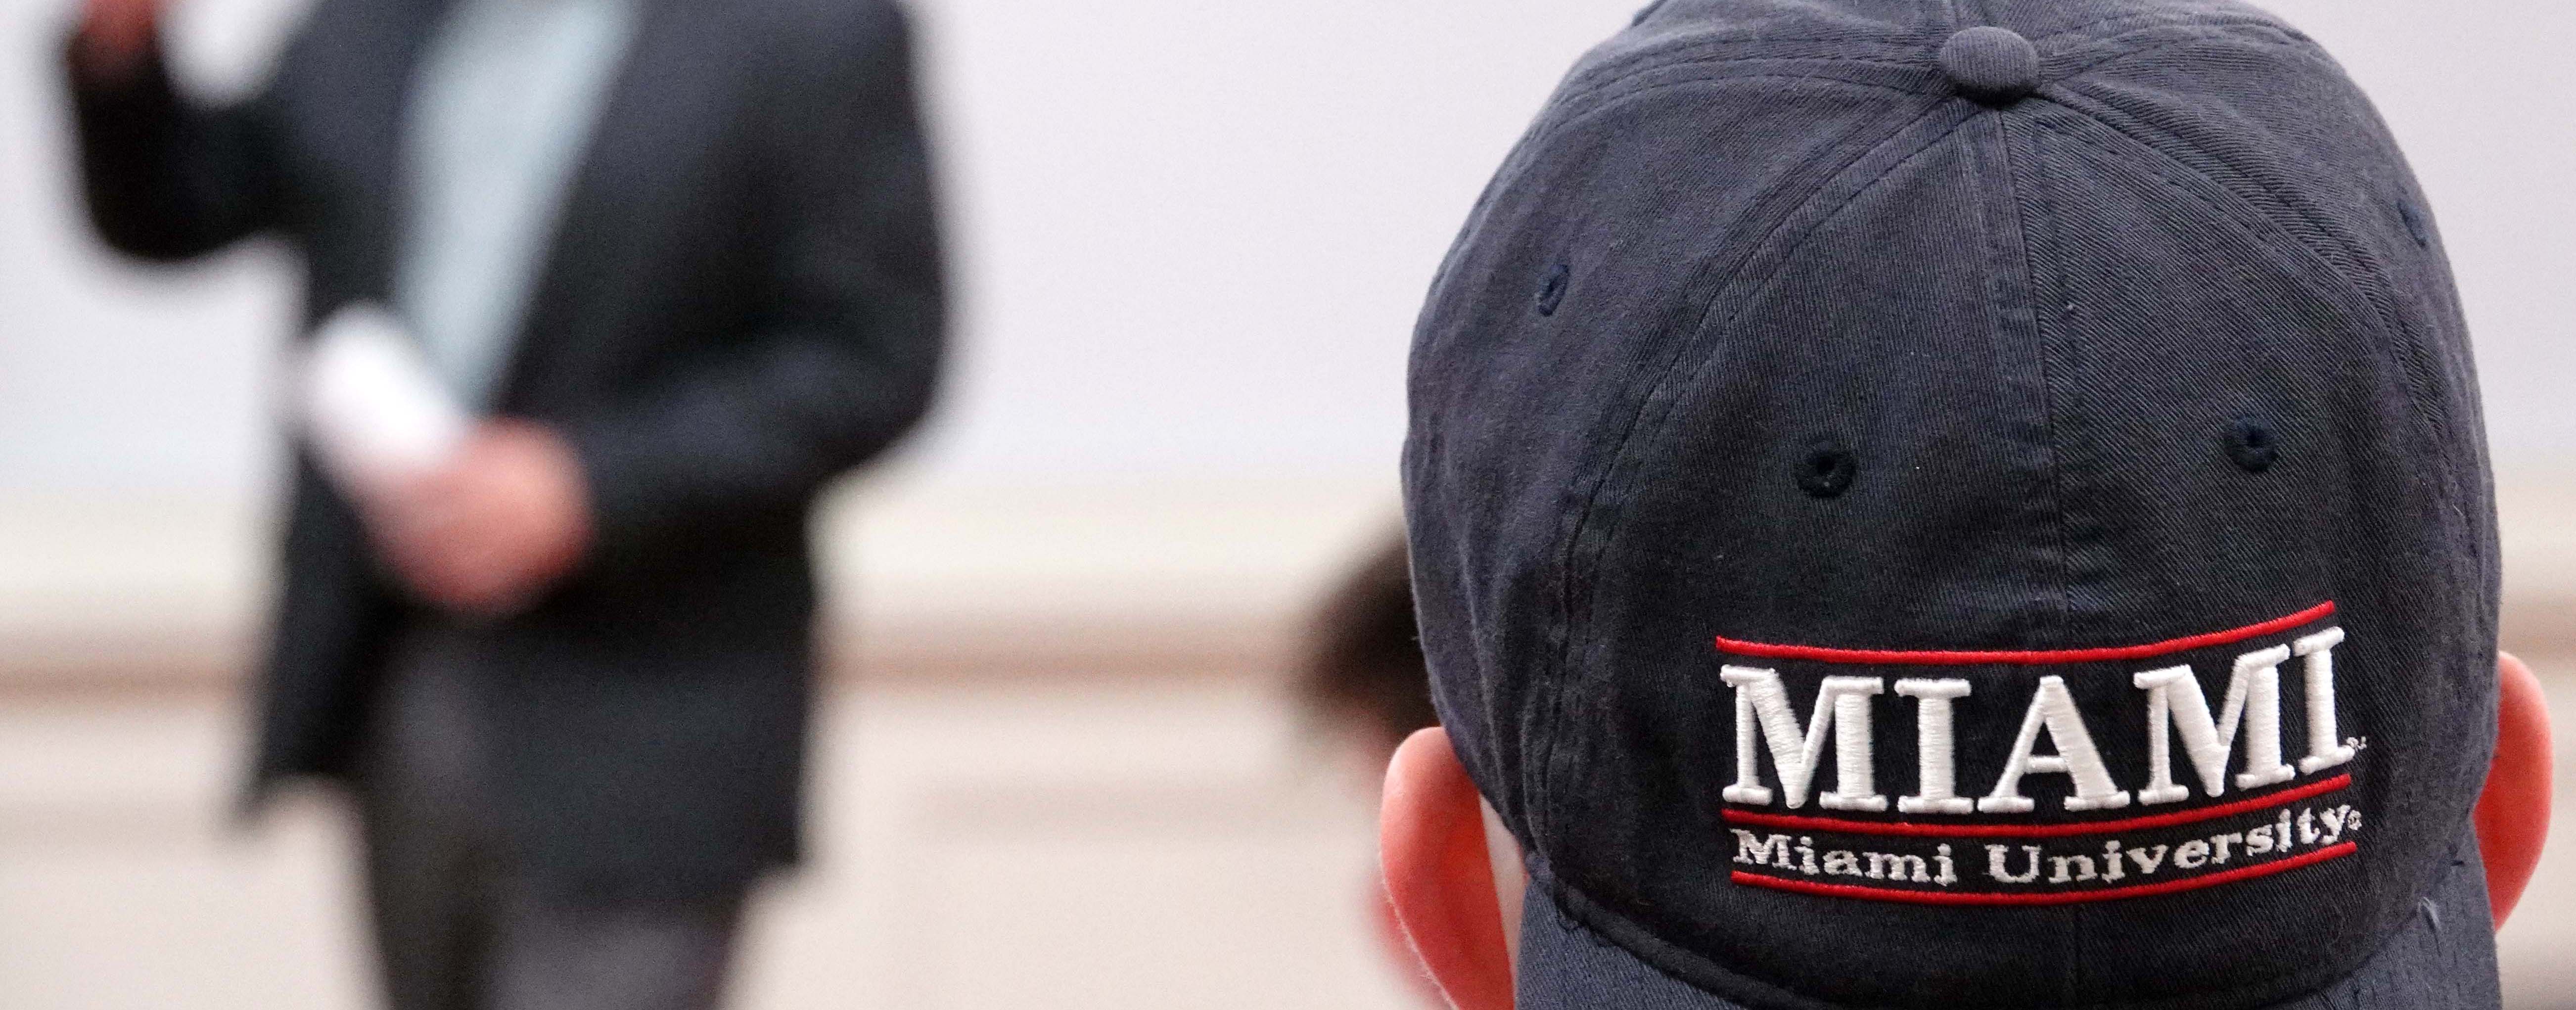 Miami University hat on student's head backward